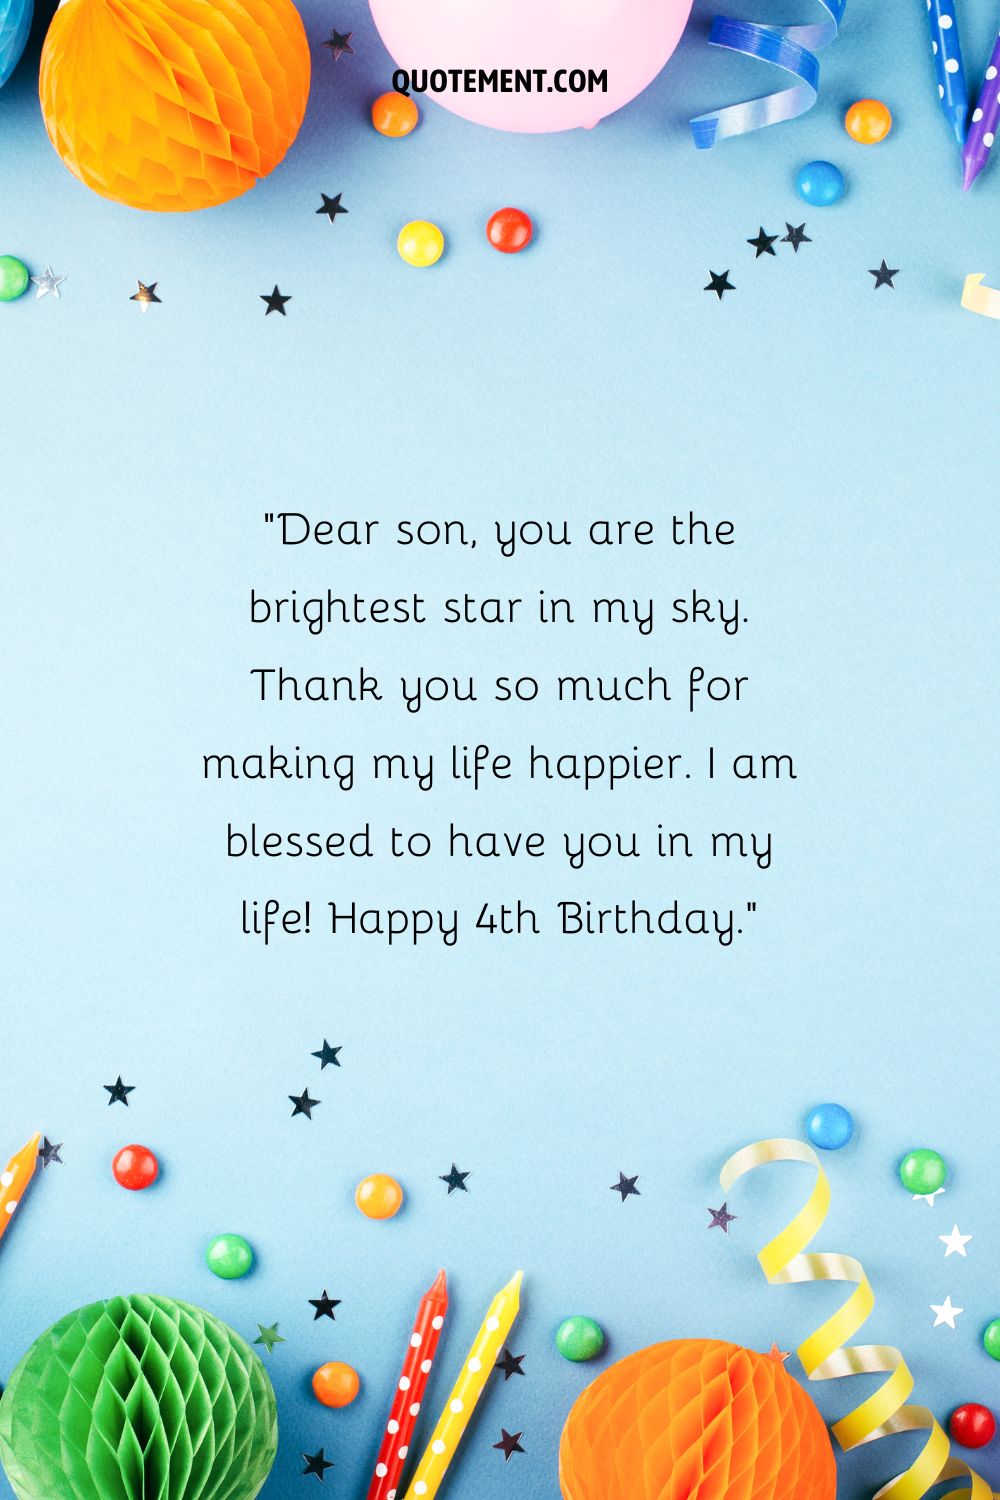 blue birthday card setting representing happy 4th birthday to my son